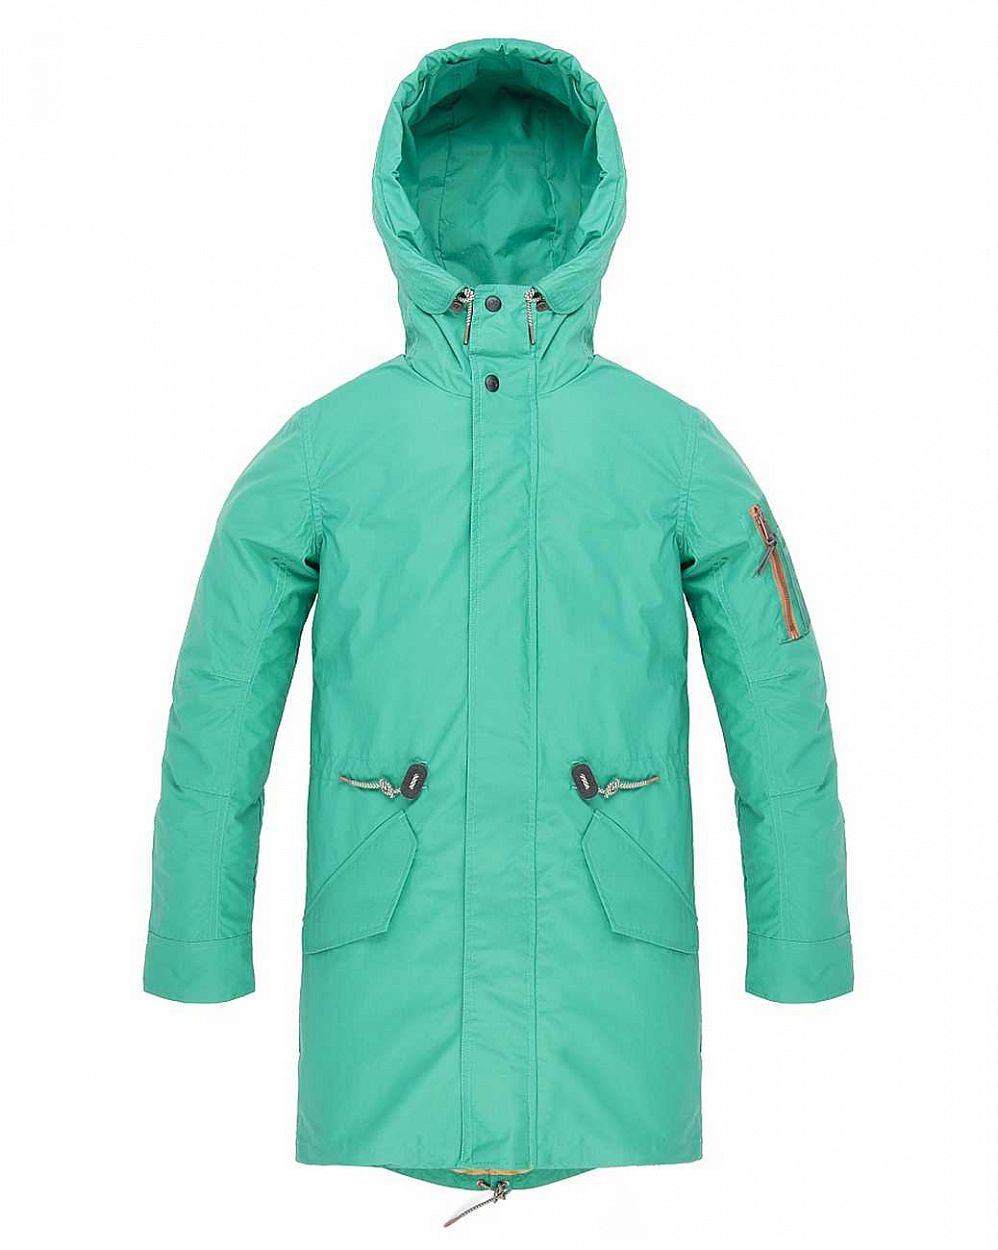 Куртка-Парка Loading Garments Supply Jacket 2407 green bosphorus отзывы